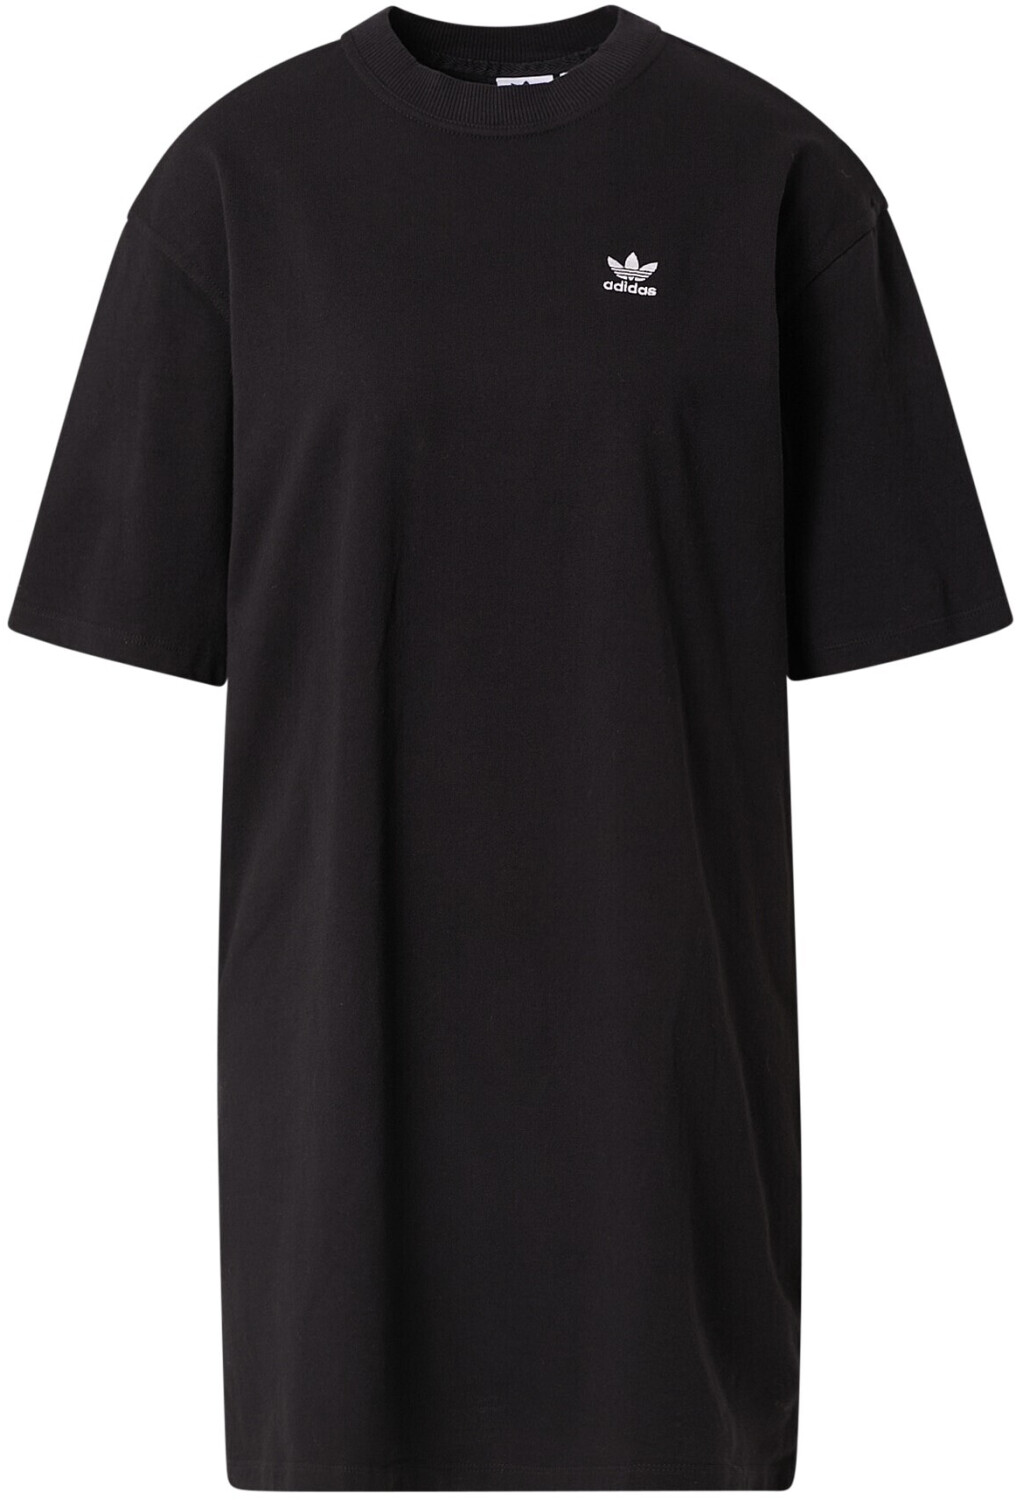 Buy Adidas Originals Adicolor Trefoil Dress Best Deals Big T-Shirt on from – (Today) £14.99 Classics